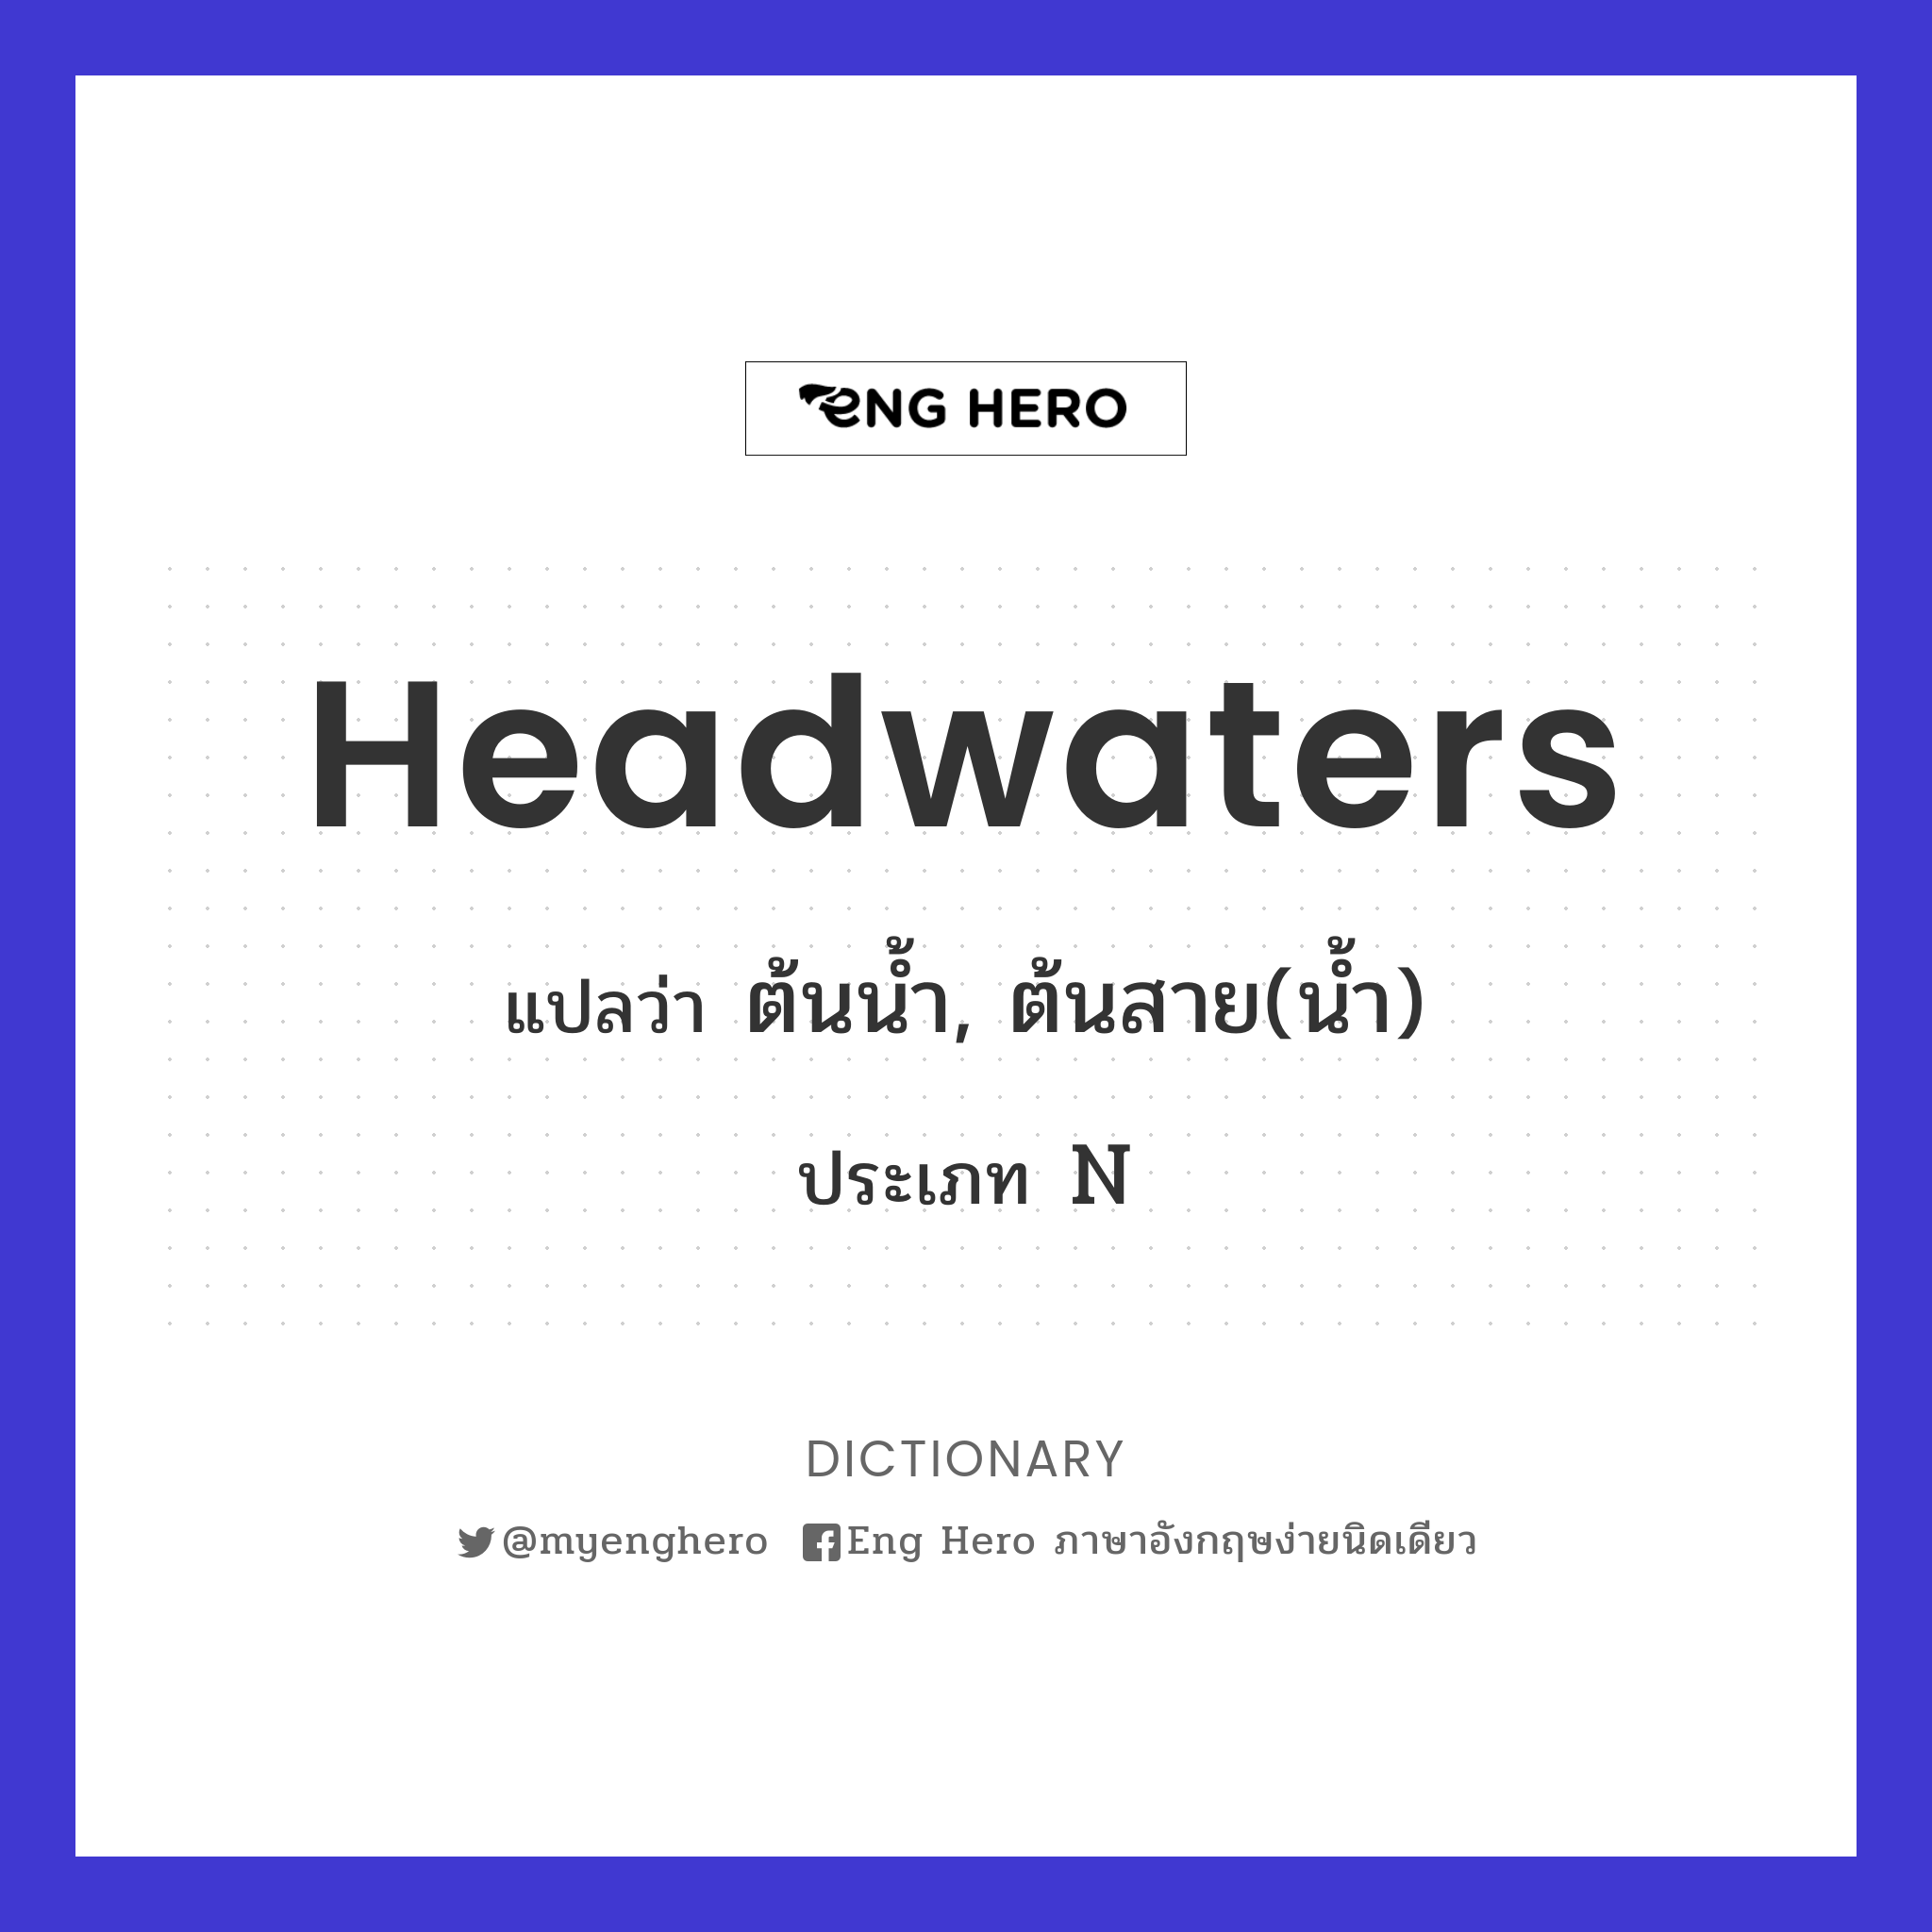 headwaters